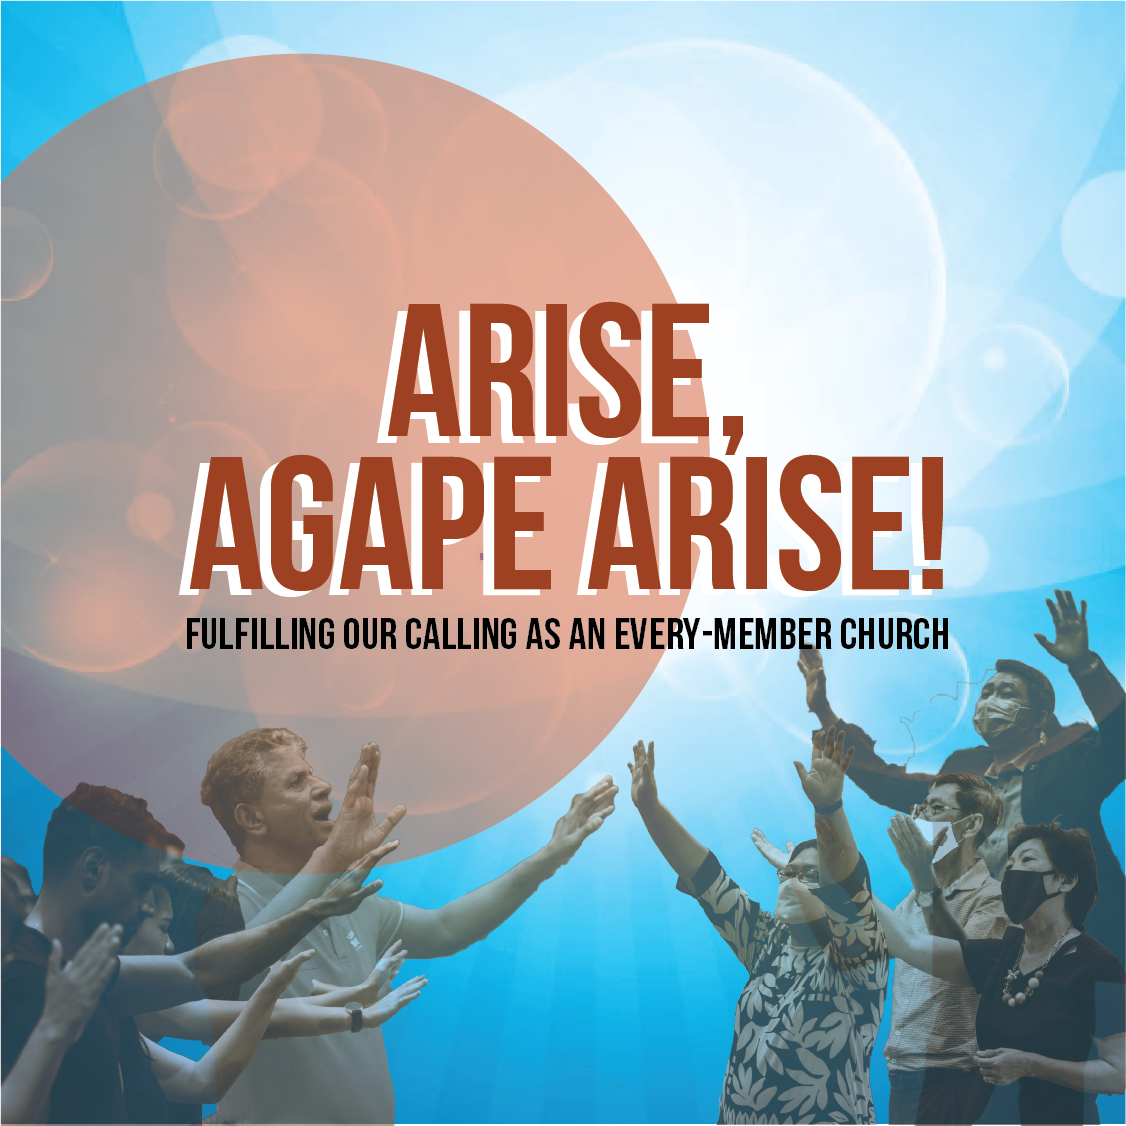 Agape: An Every-Member Church